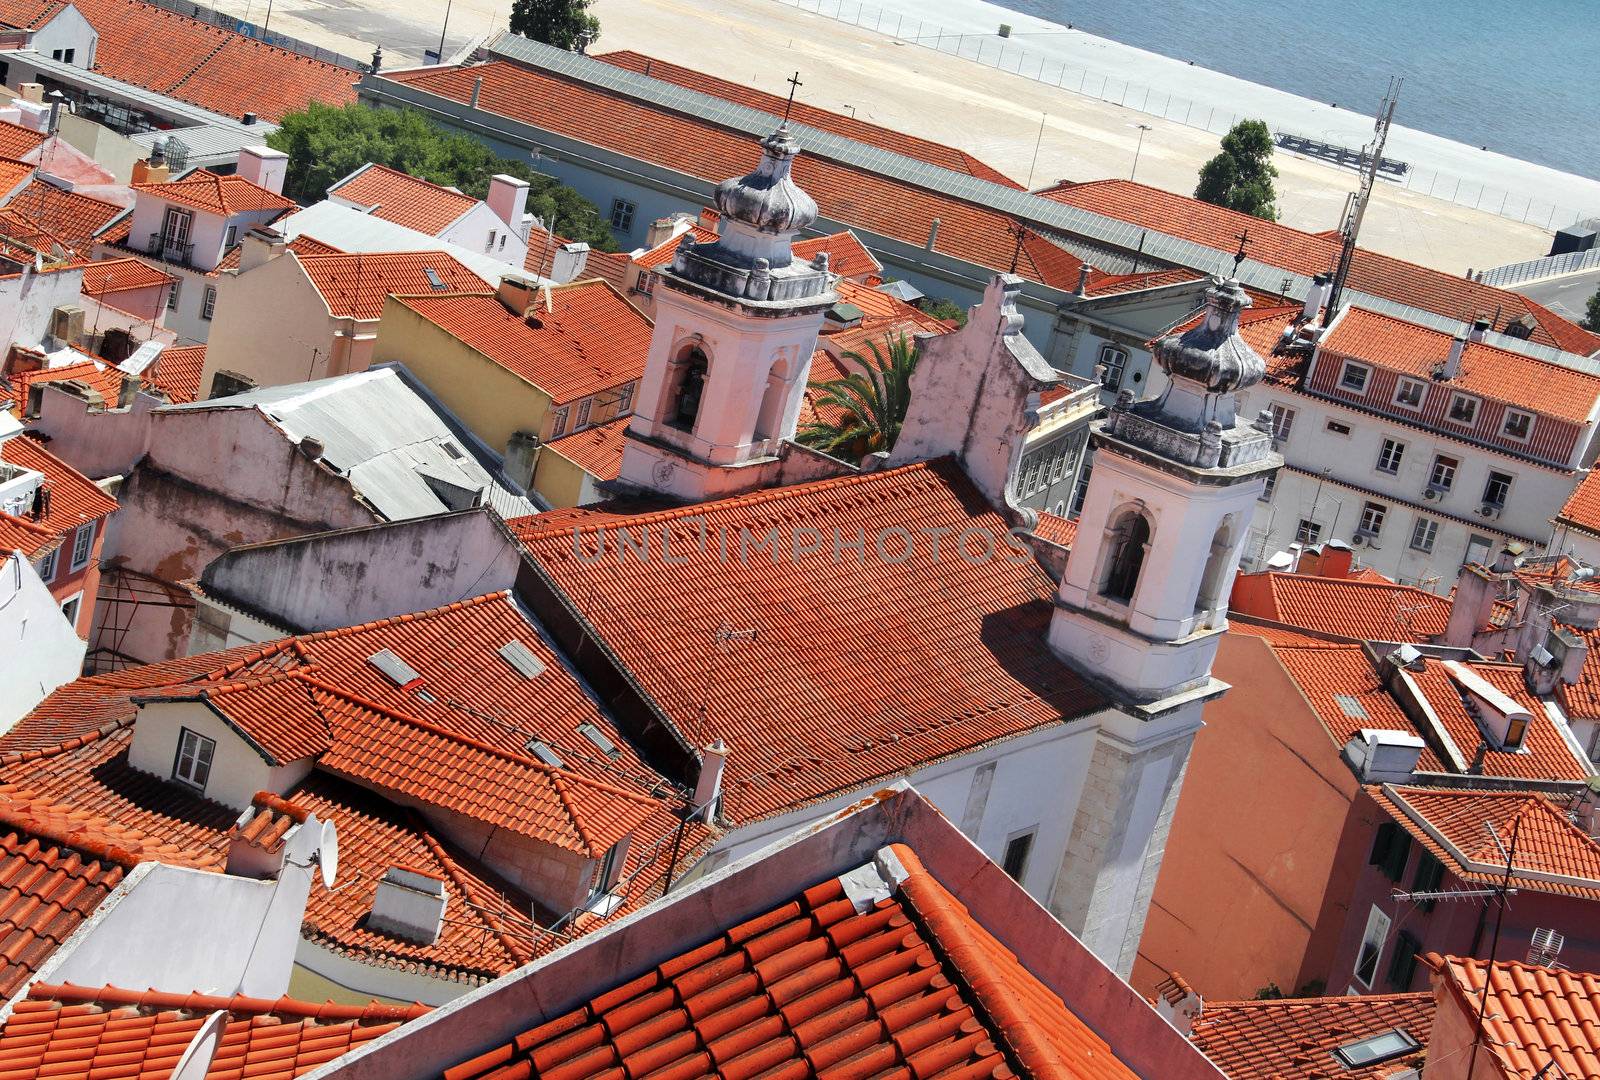 Lisbon roofs by tanouchka